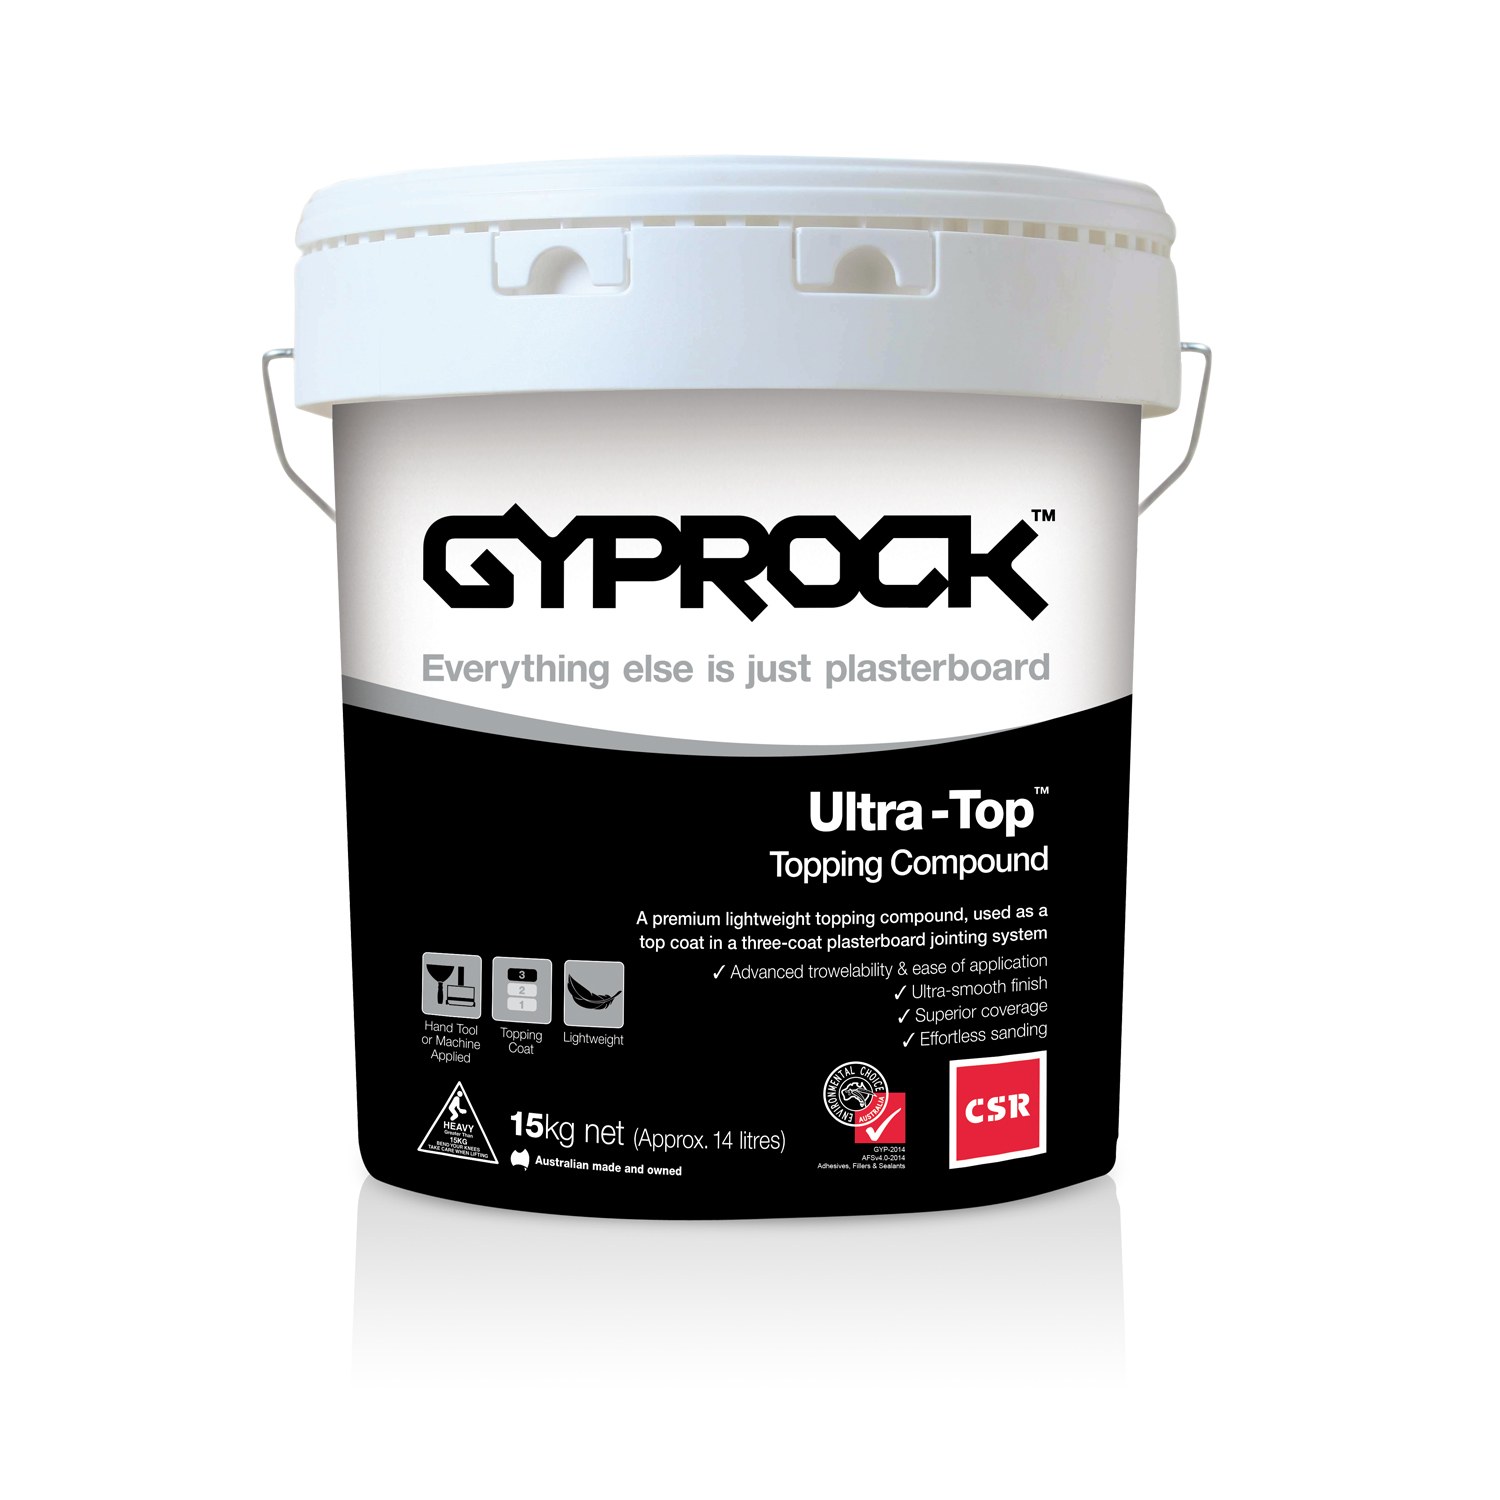 Gyprock Ultra-Top™